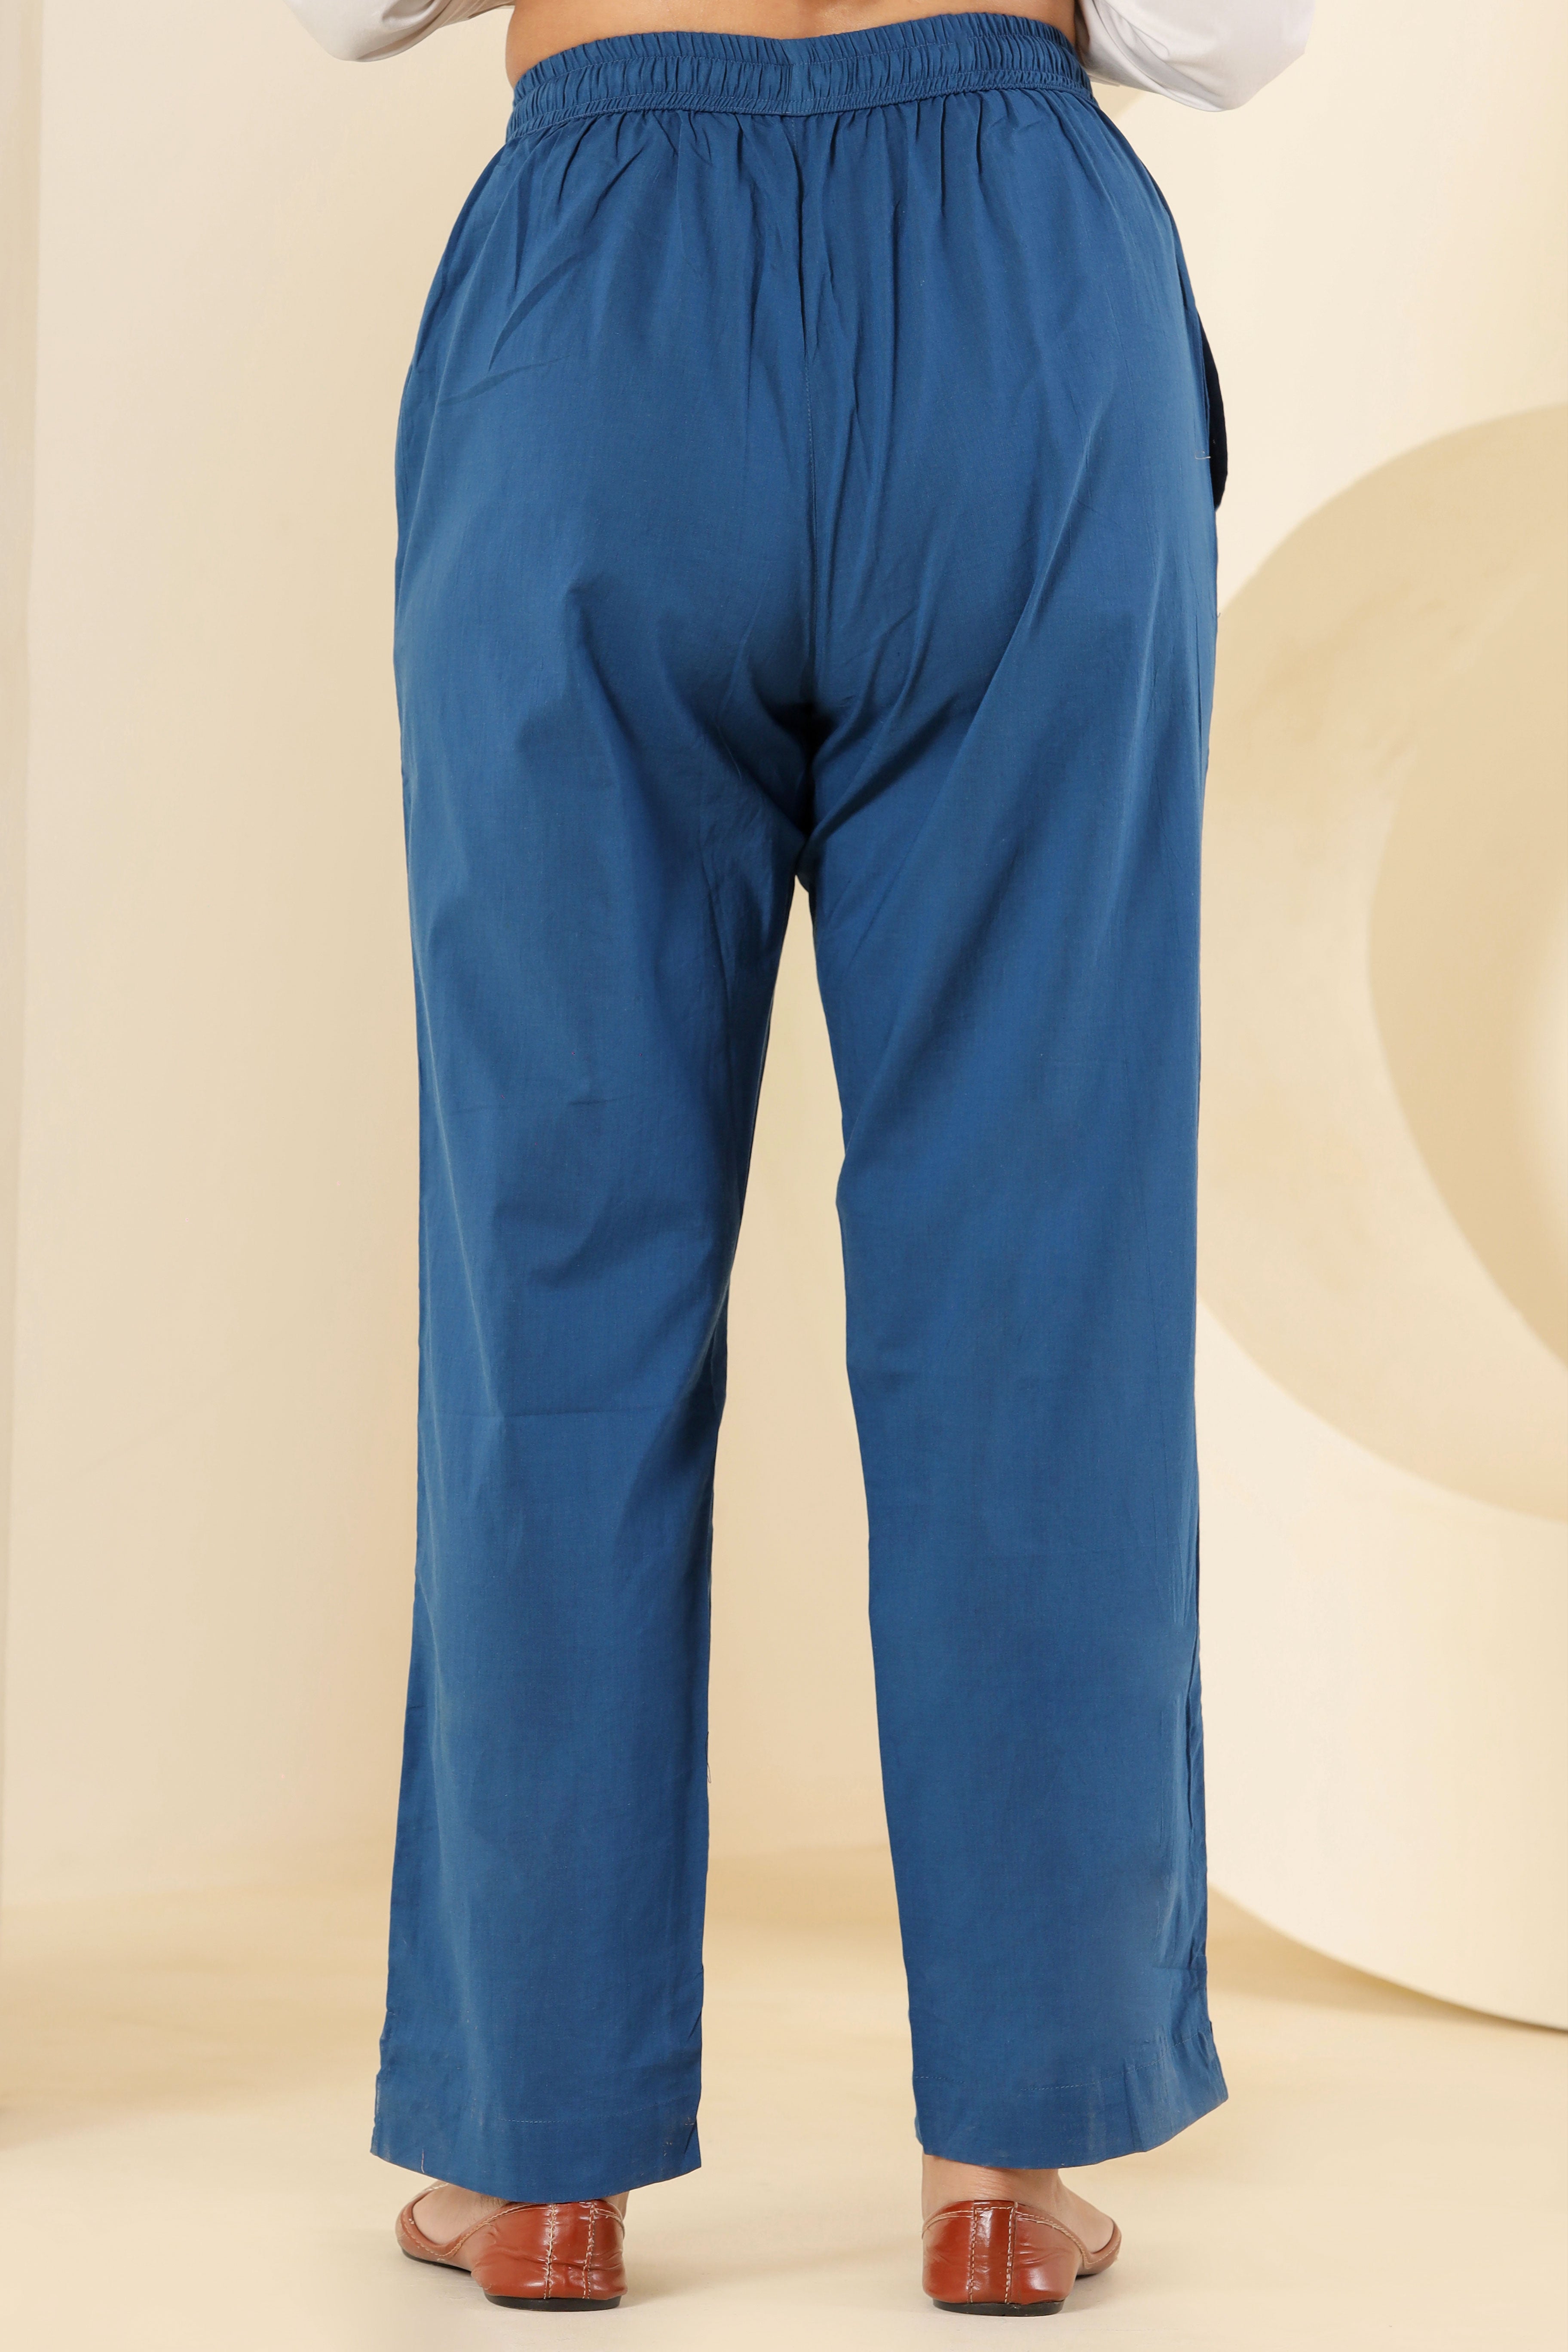 Indigo Blue Cotton Cambric Lounge Pant